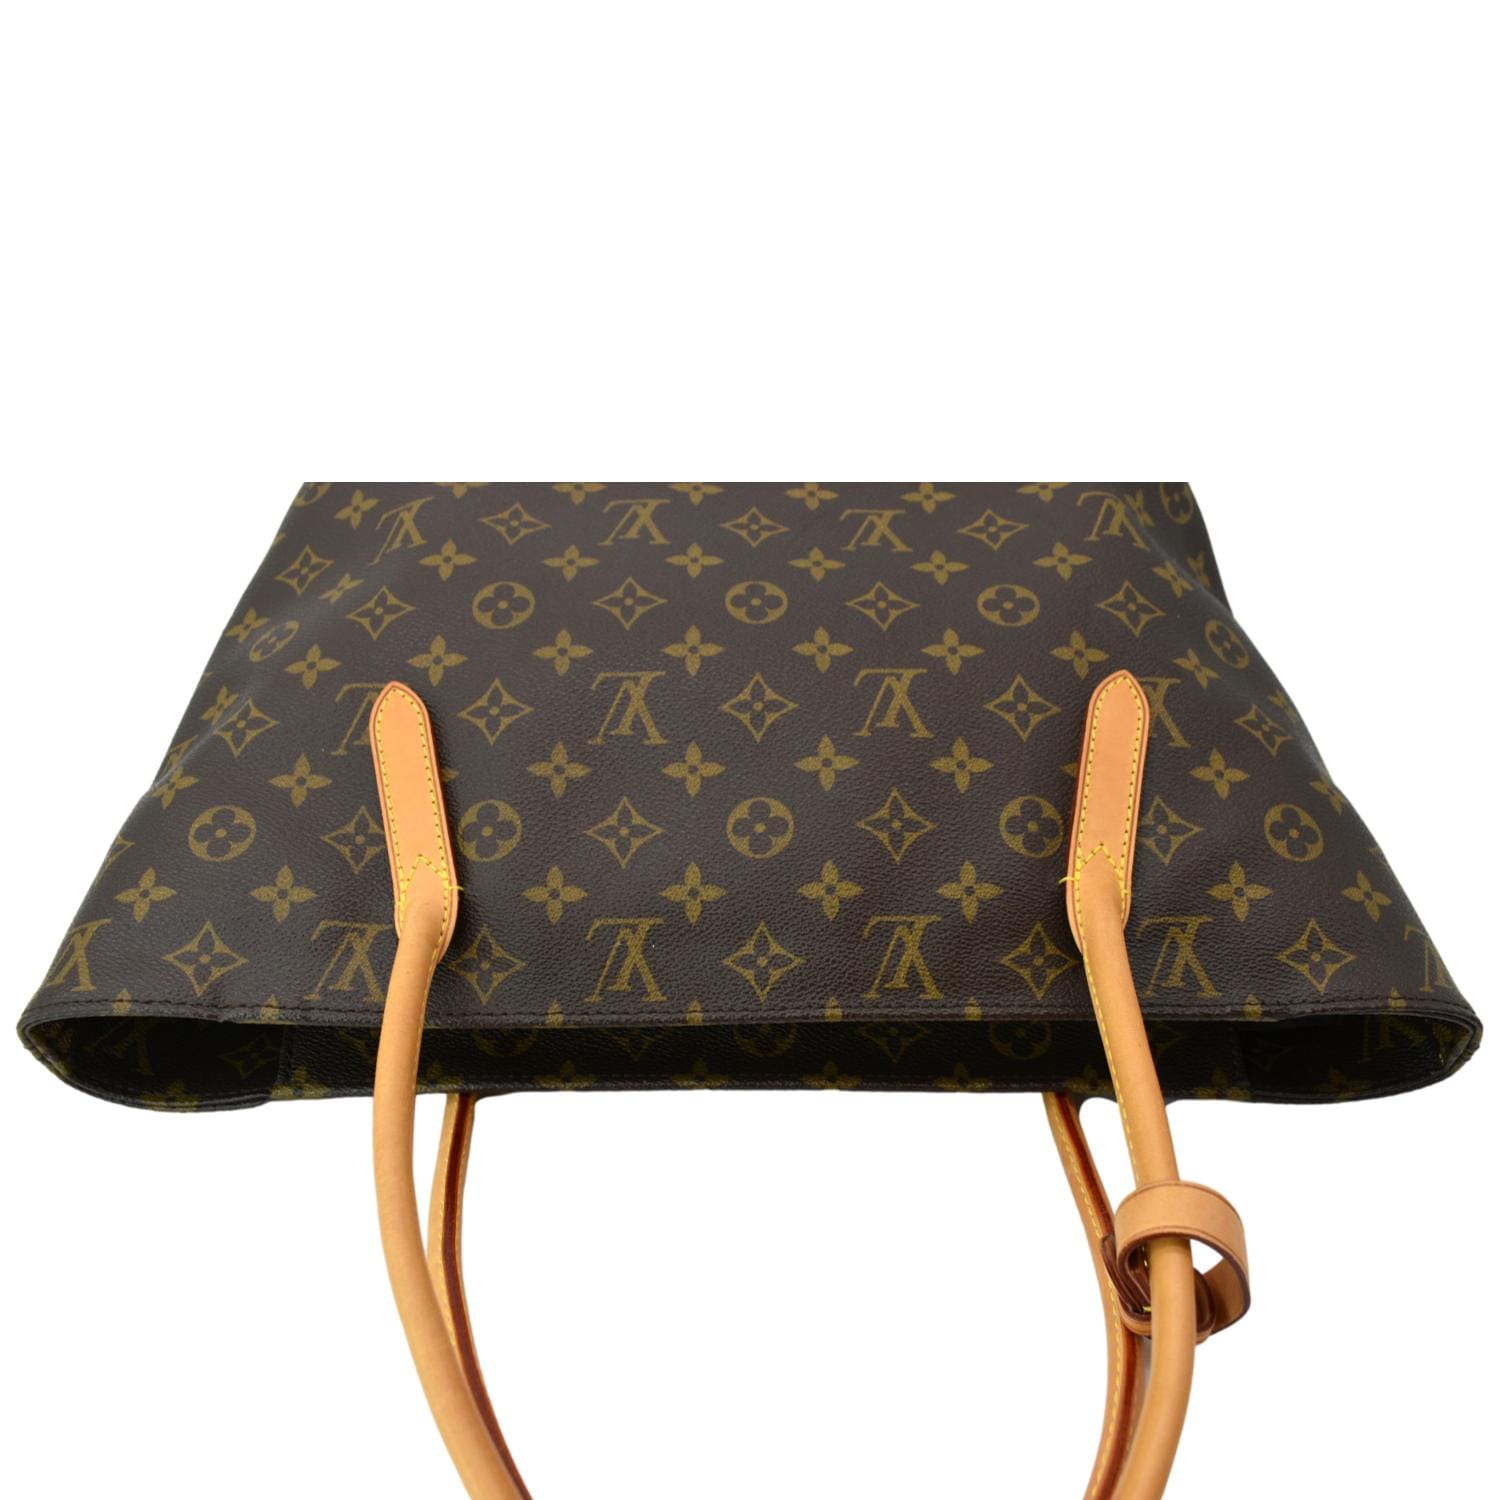 Louis Vuitton Raspail Brown Canvas Shoulder Bag (Pre-Owned) – Bluefly